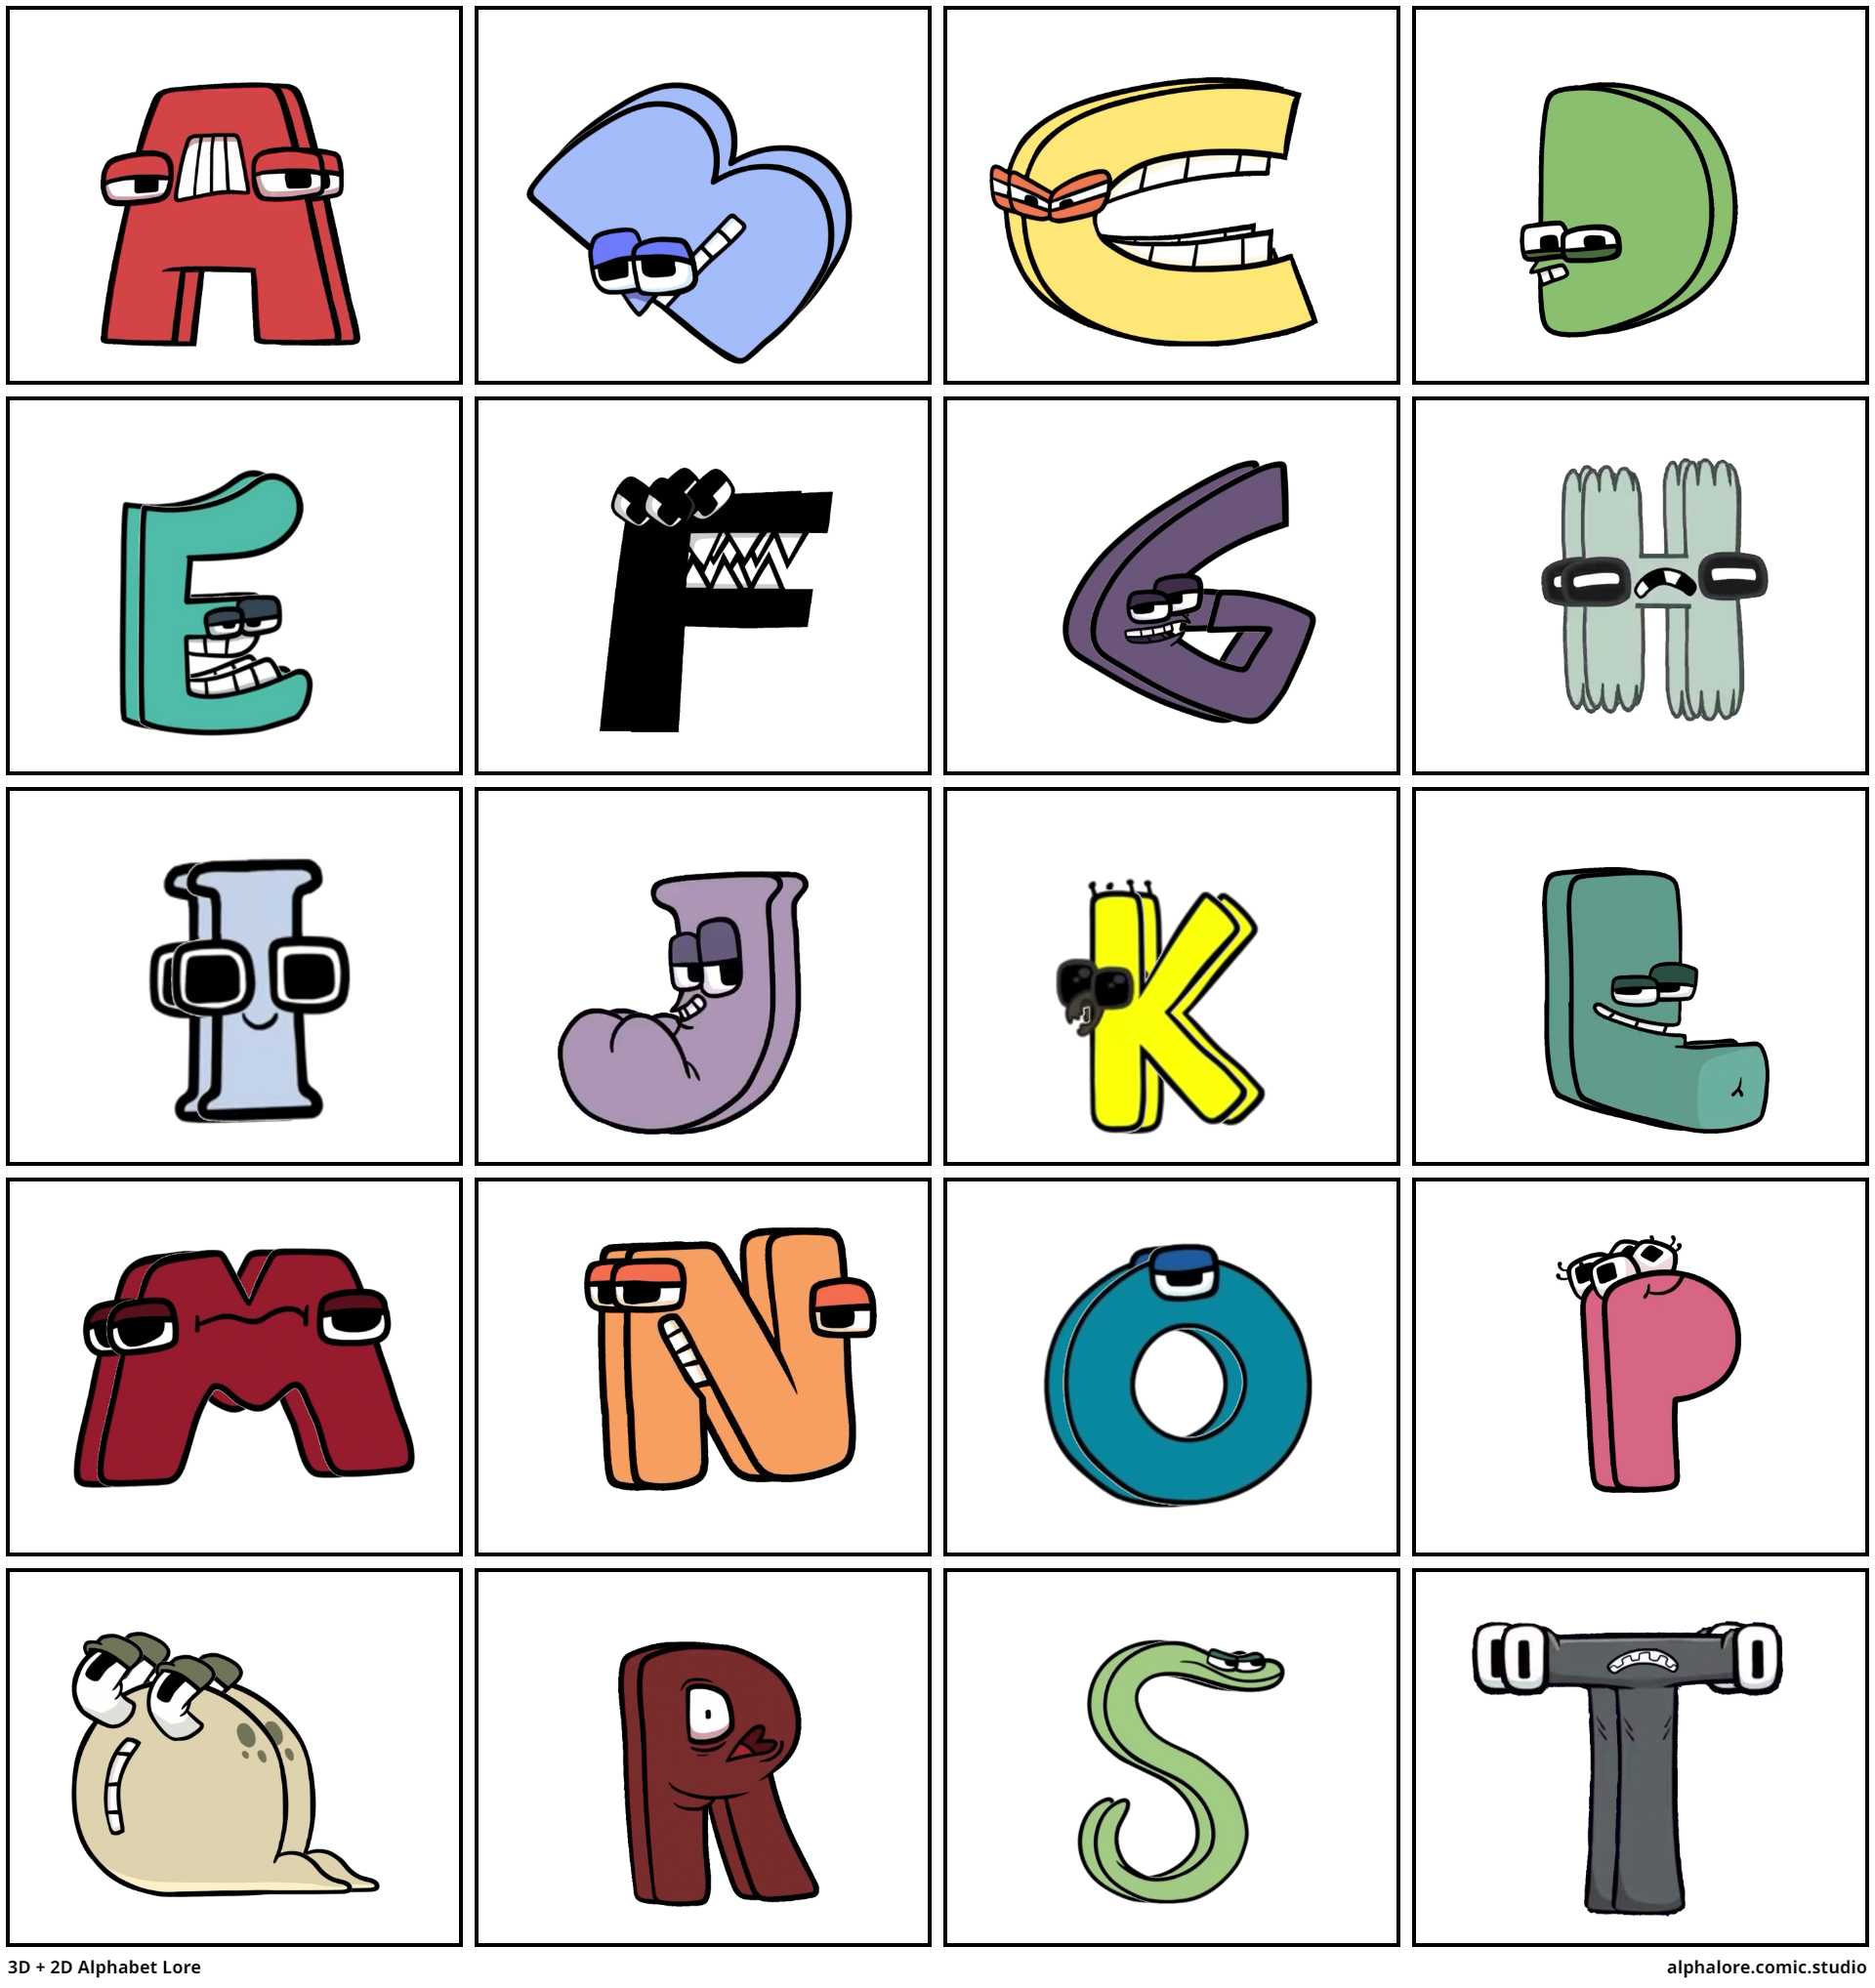 lowercase alphabet lore l-n - Comic Studio